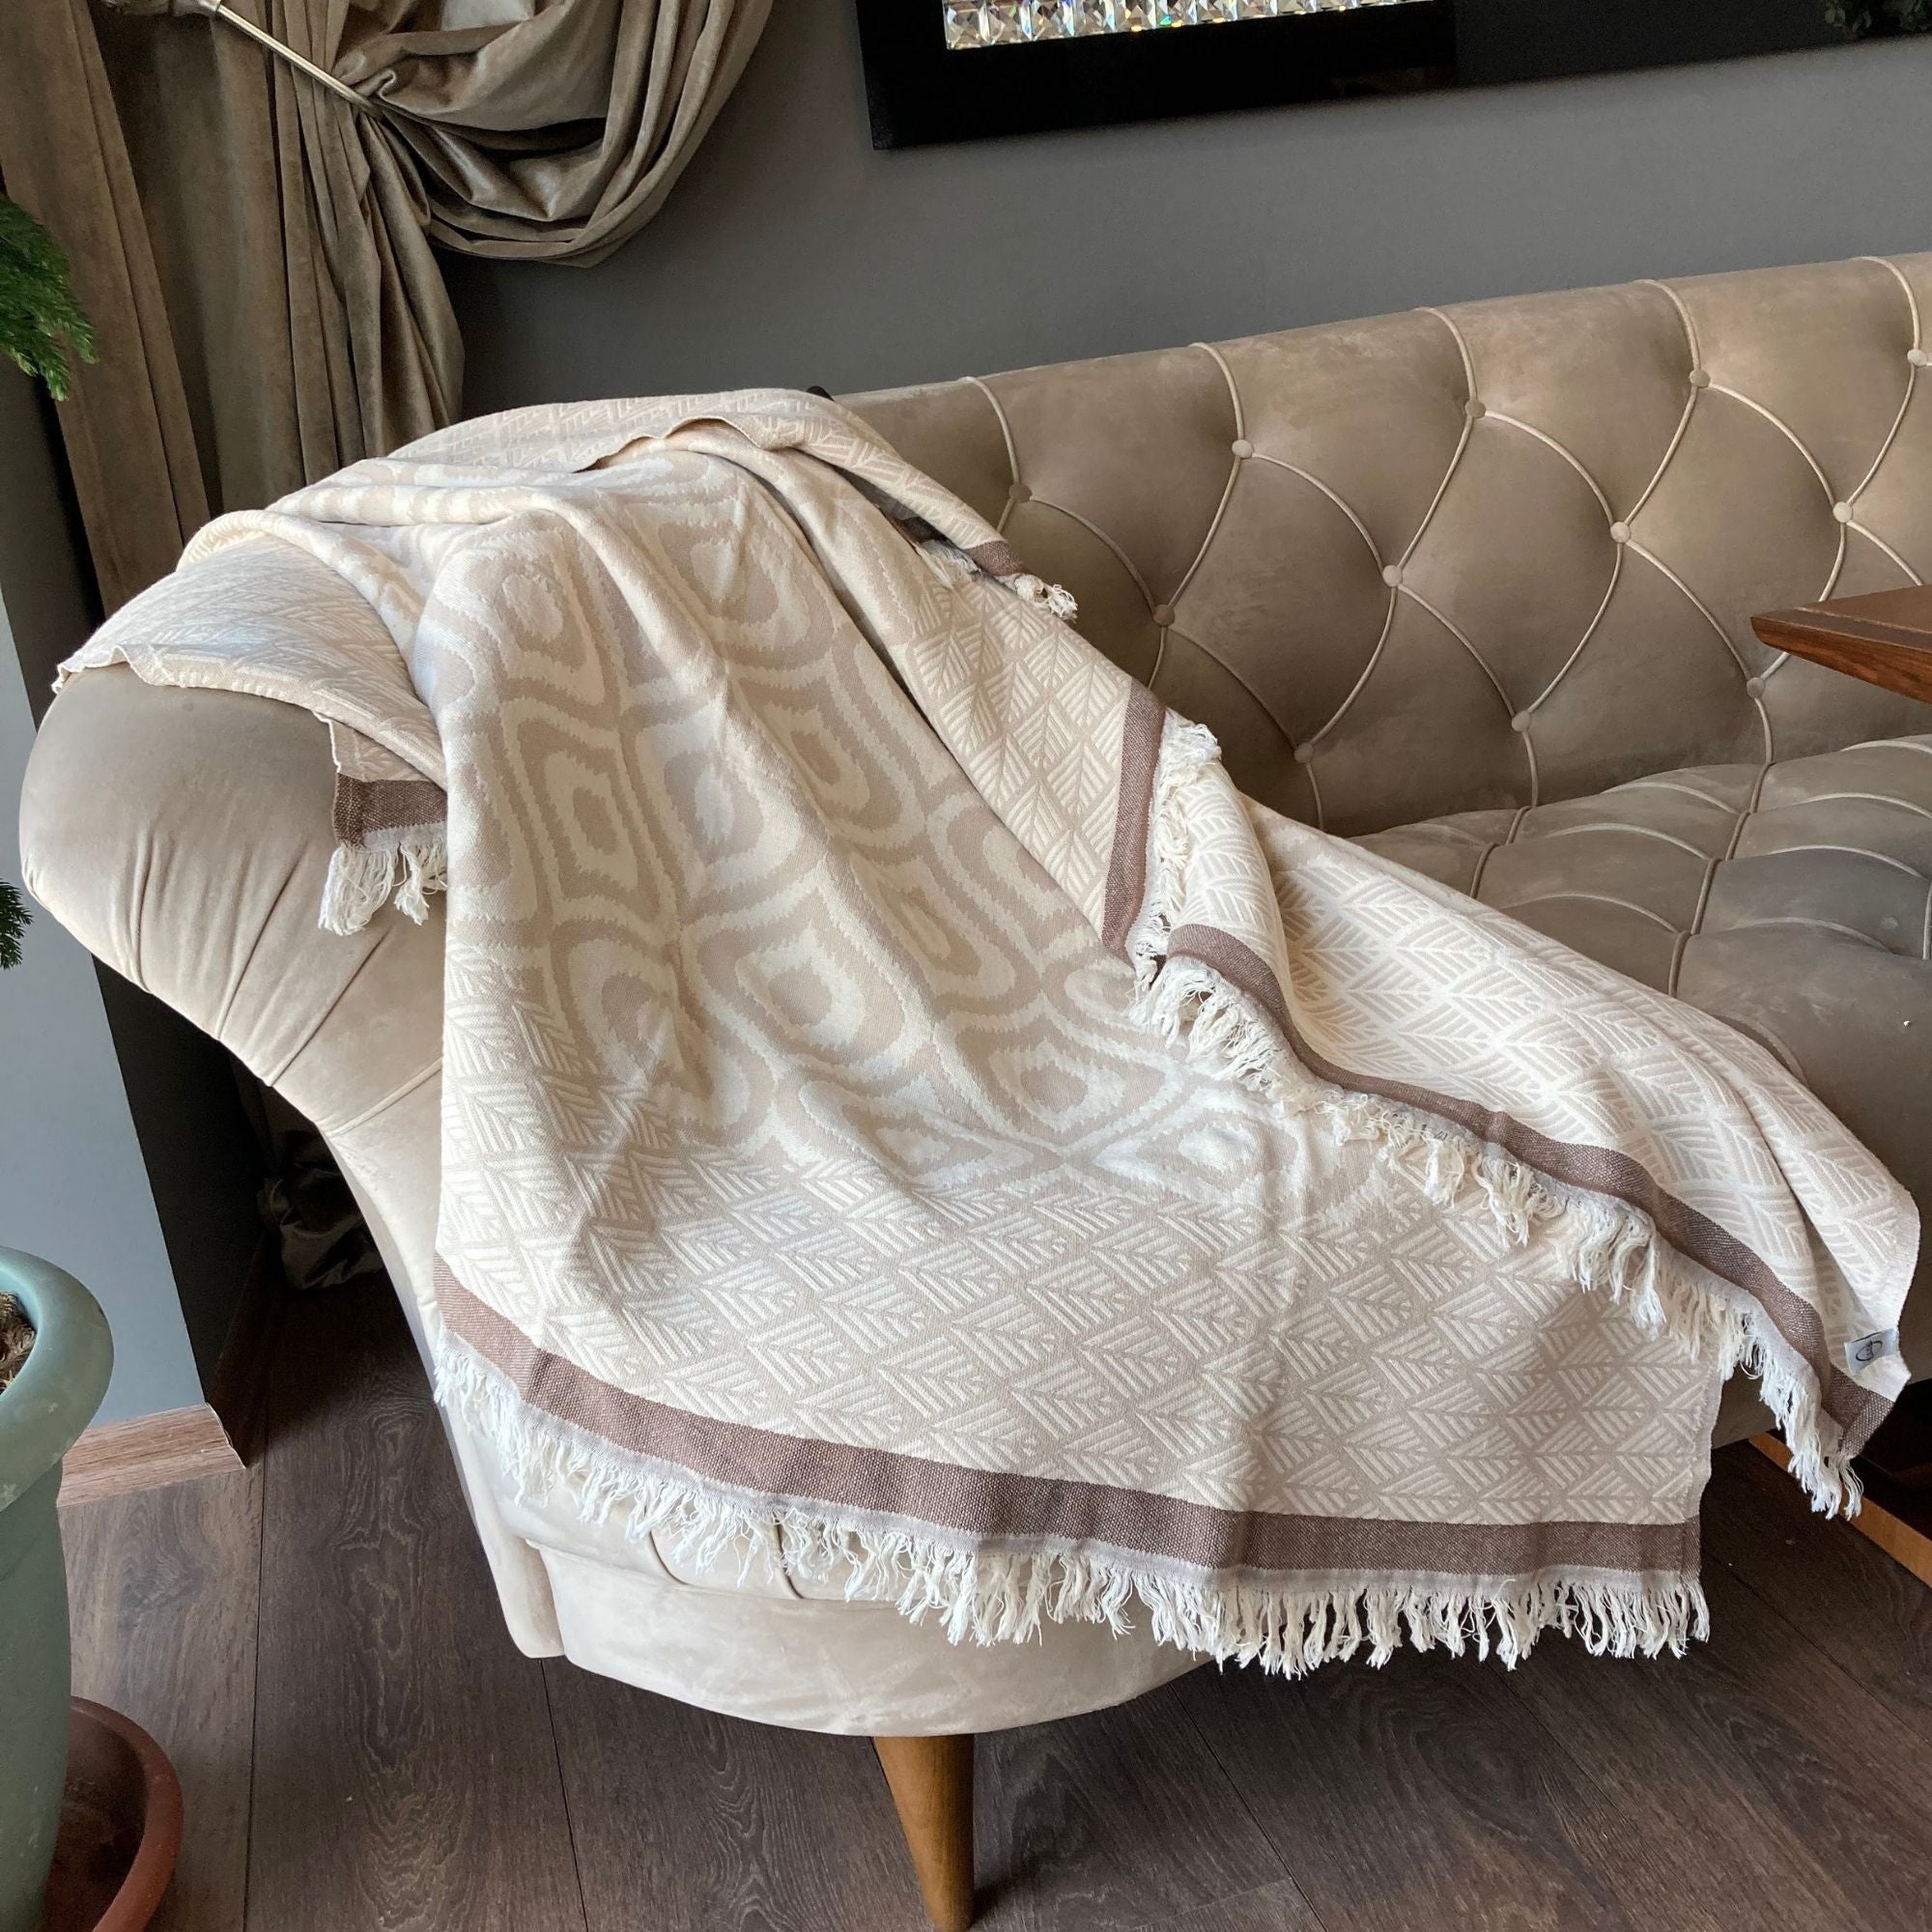 Asude | Turkish Cotton Throw Blanket | 135x170 cm